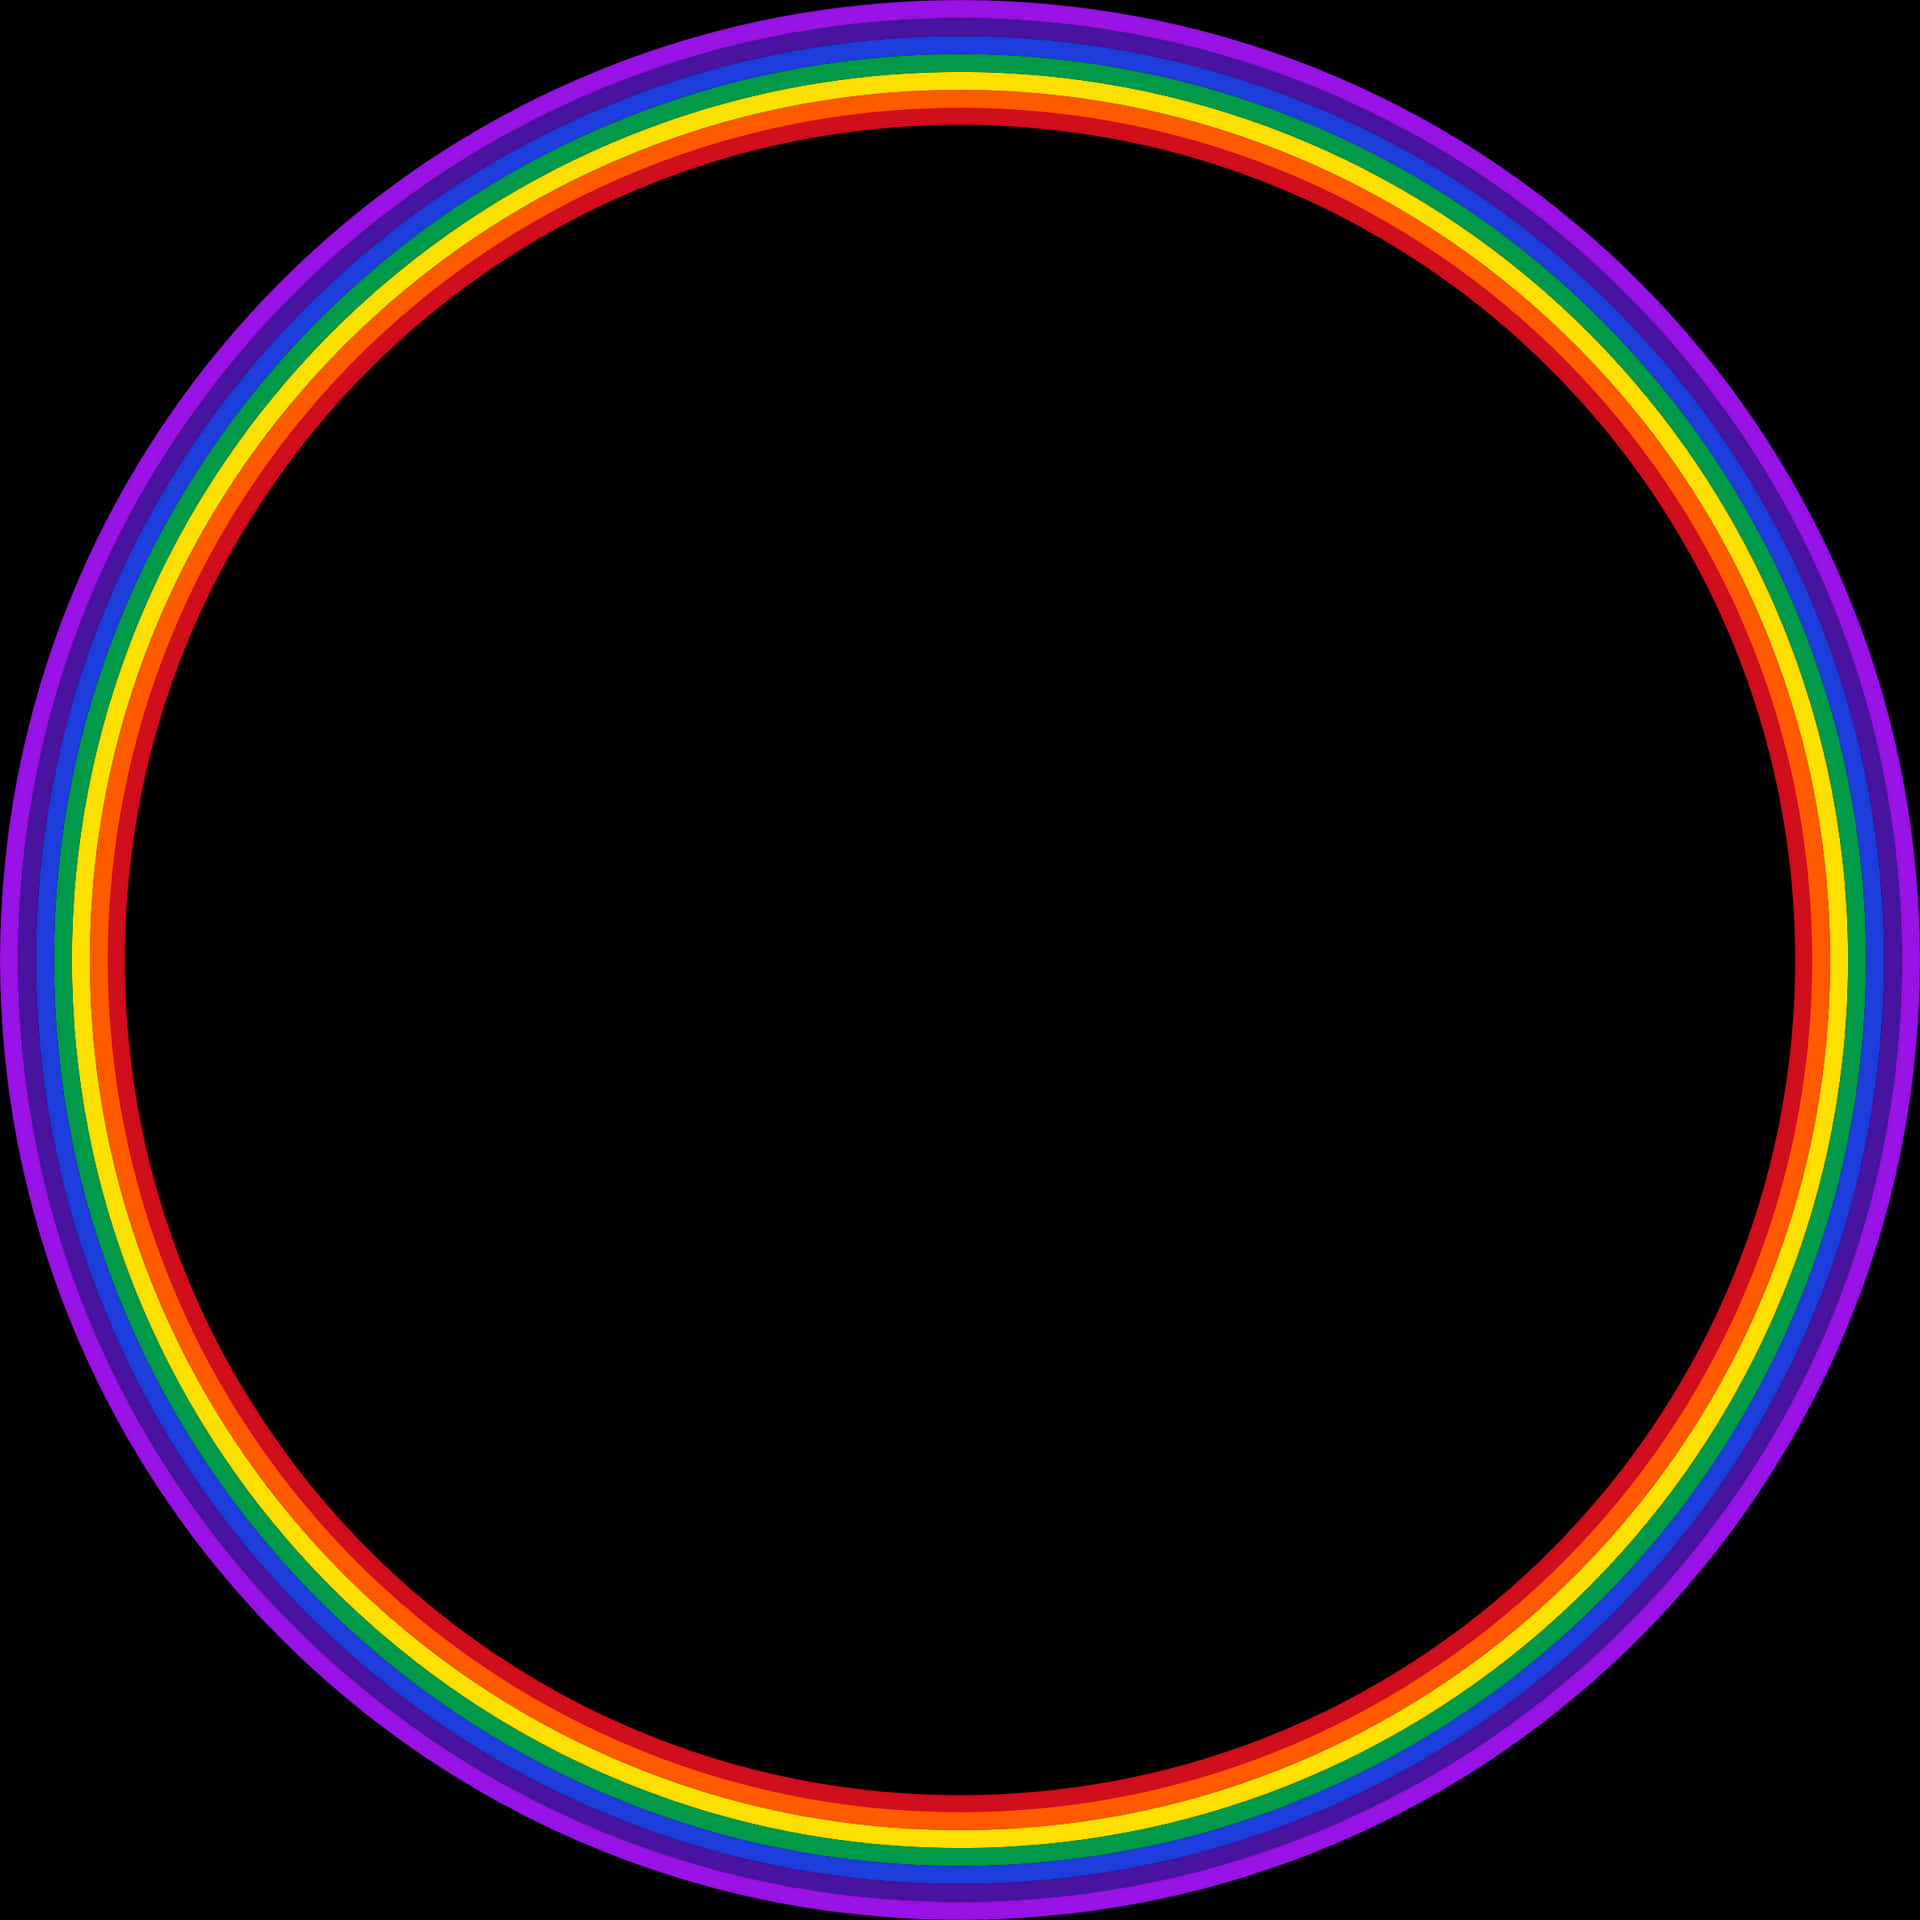 Vibrant Rainbow Circle Graphic PNG